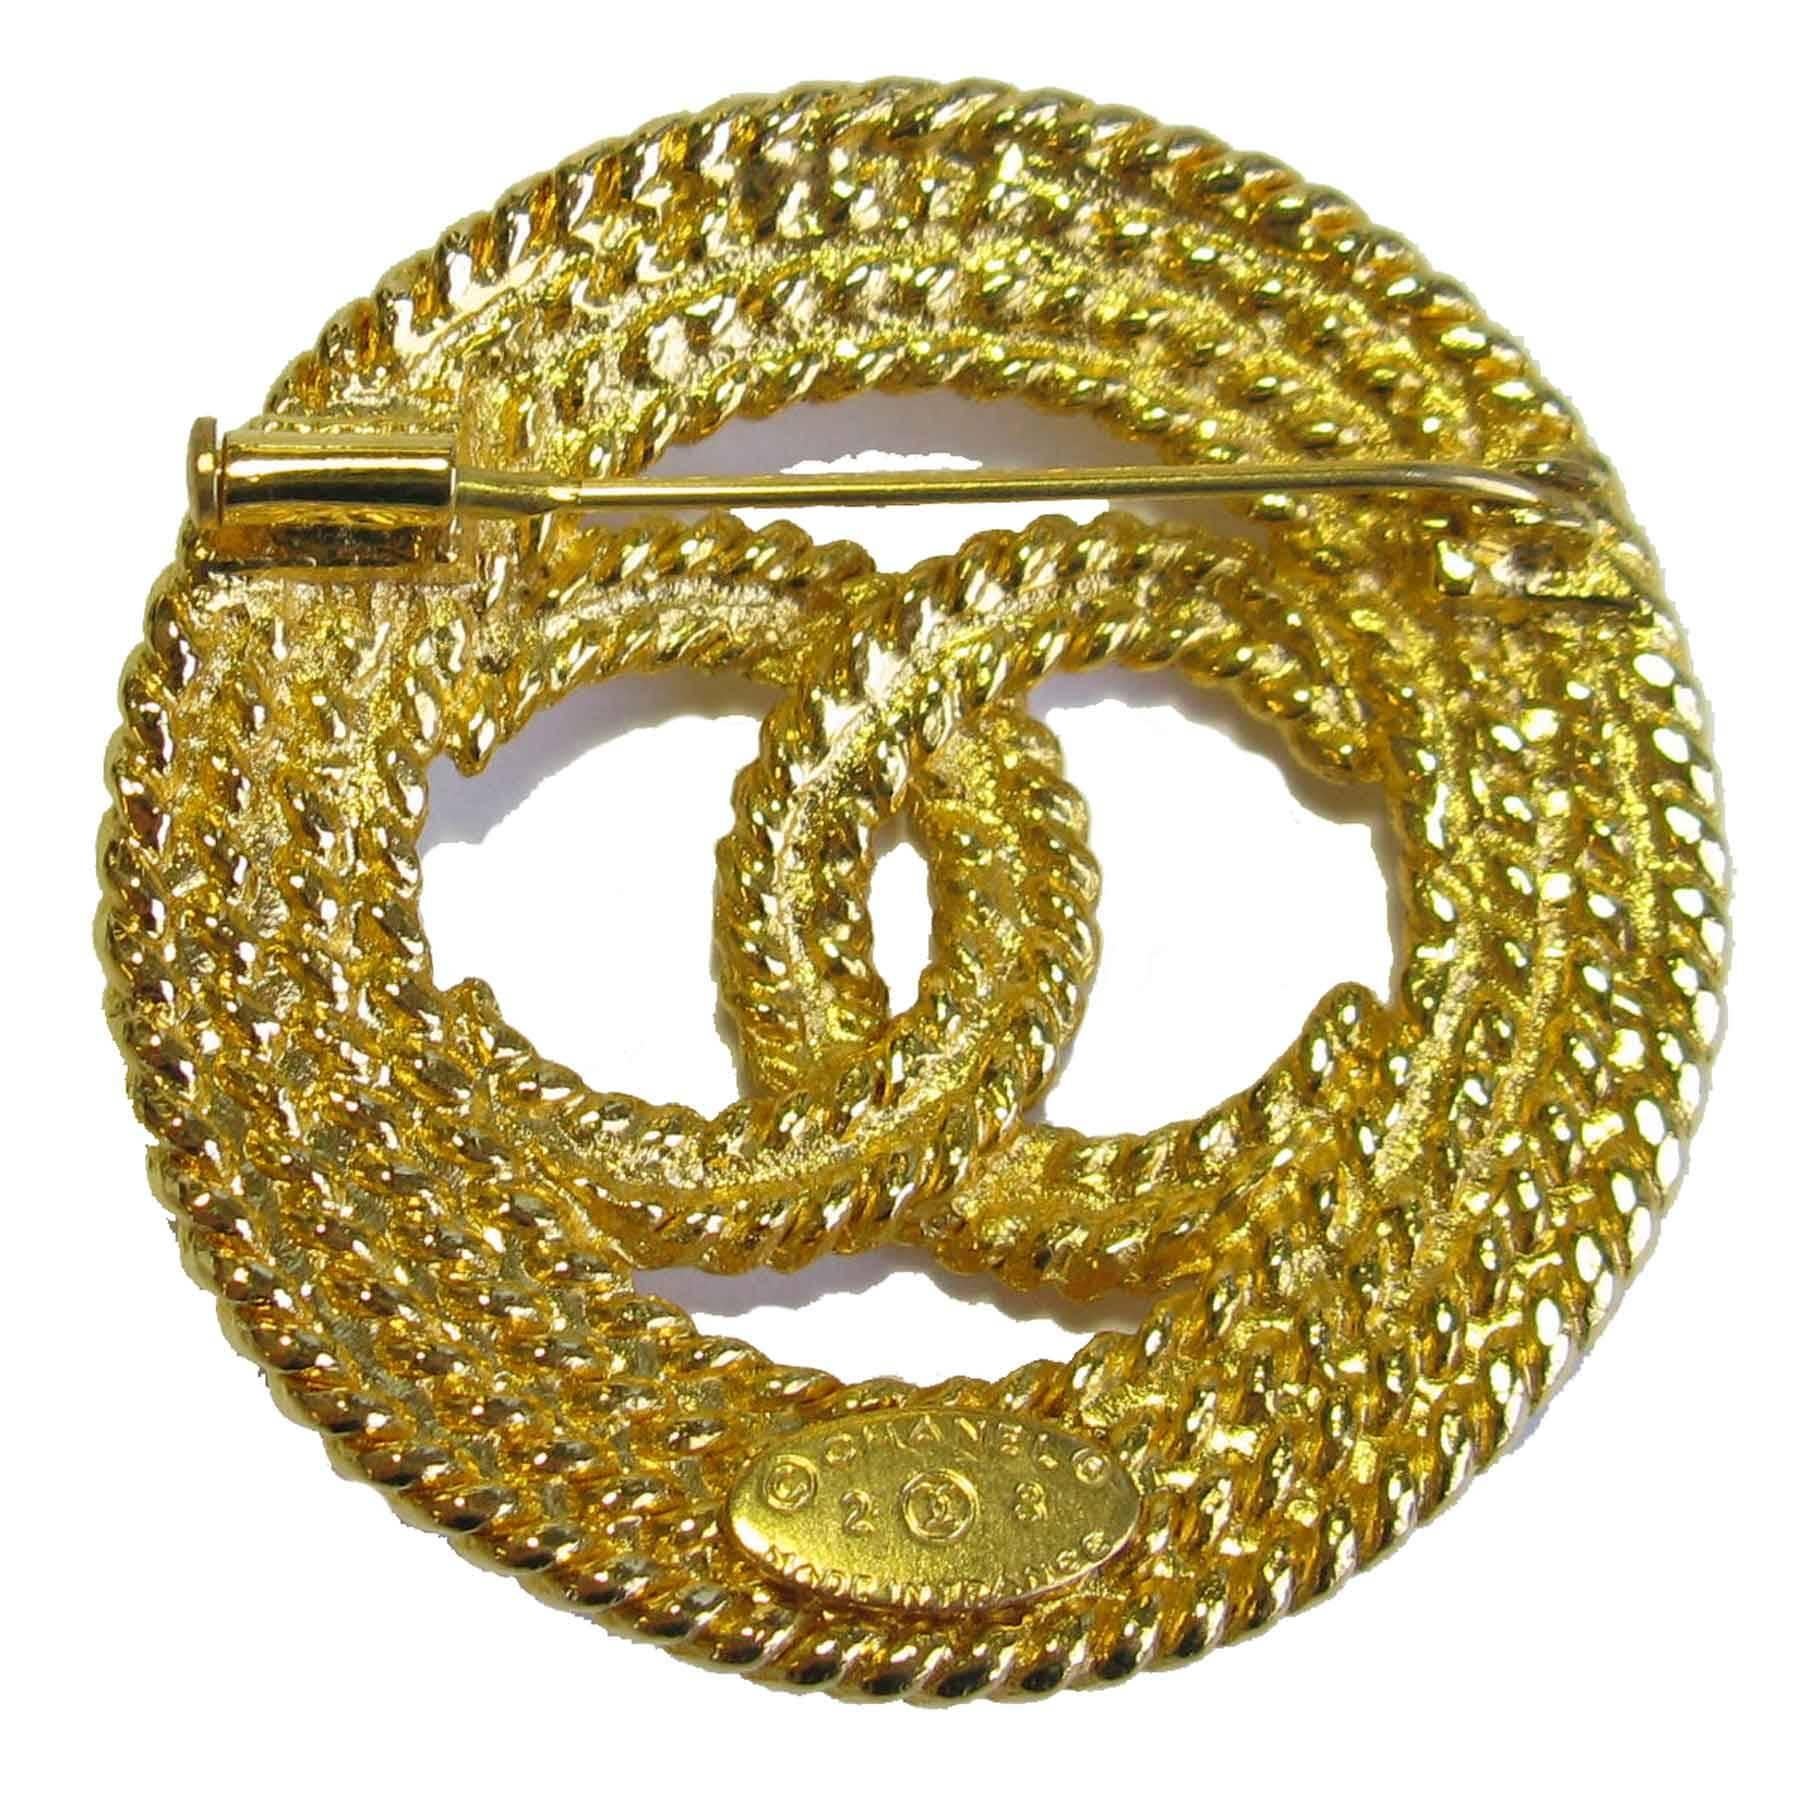 Women's Chanel Vintage Round Brooch in Gilt Metal